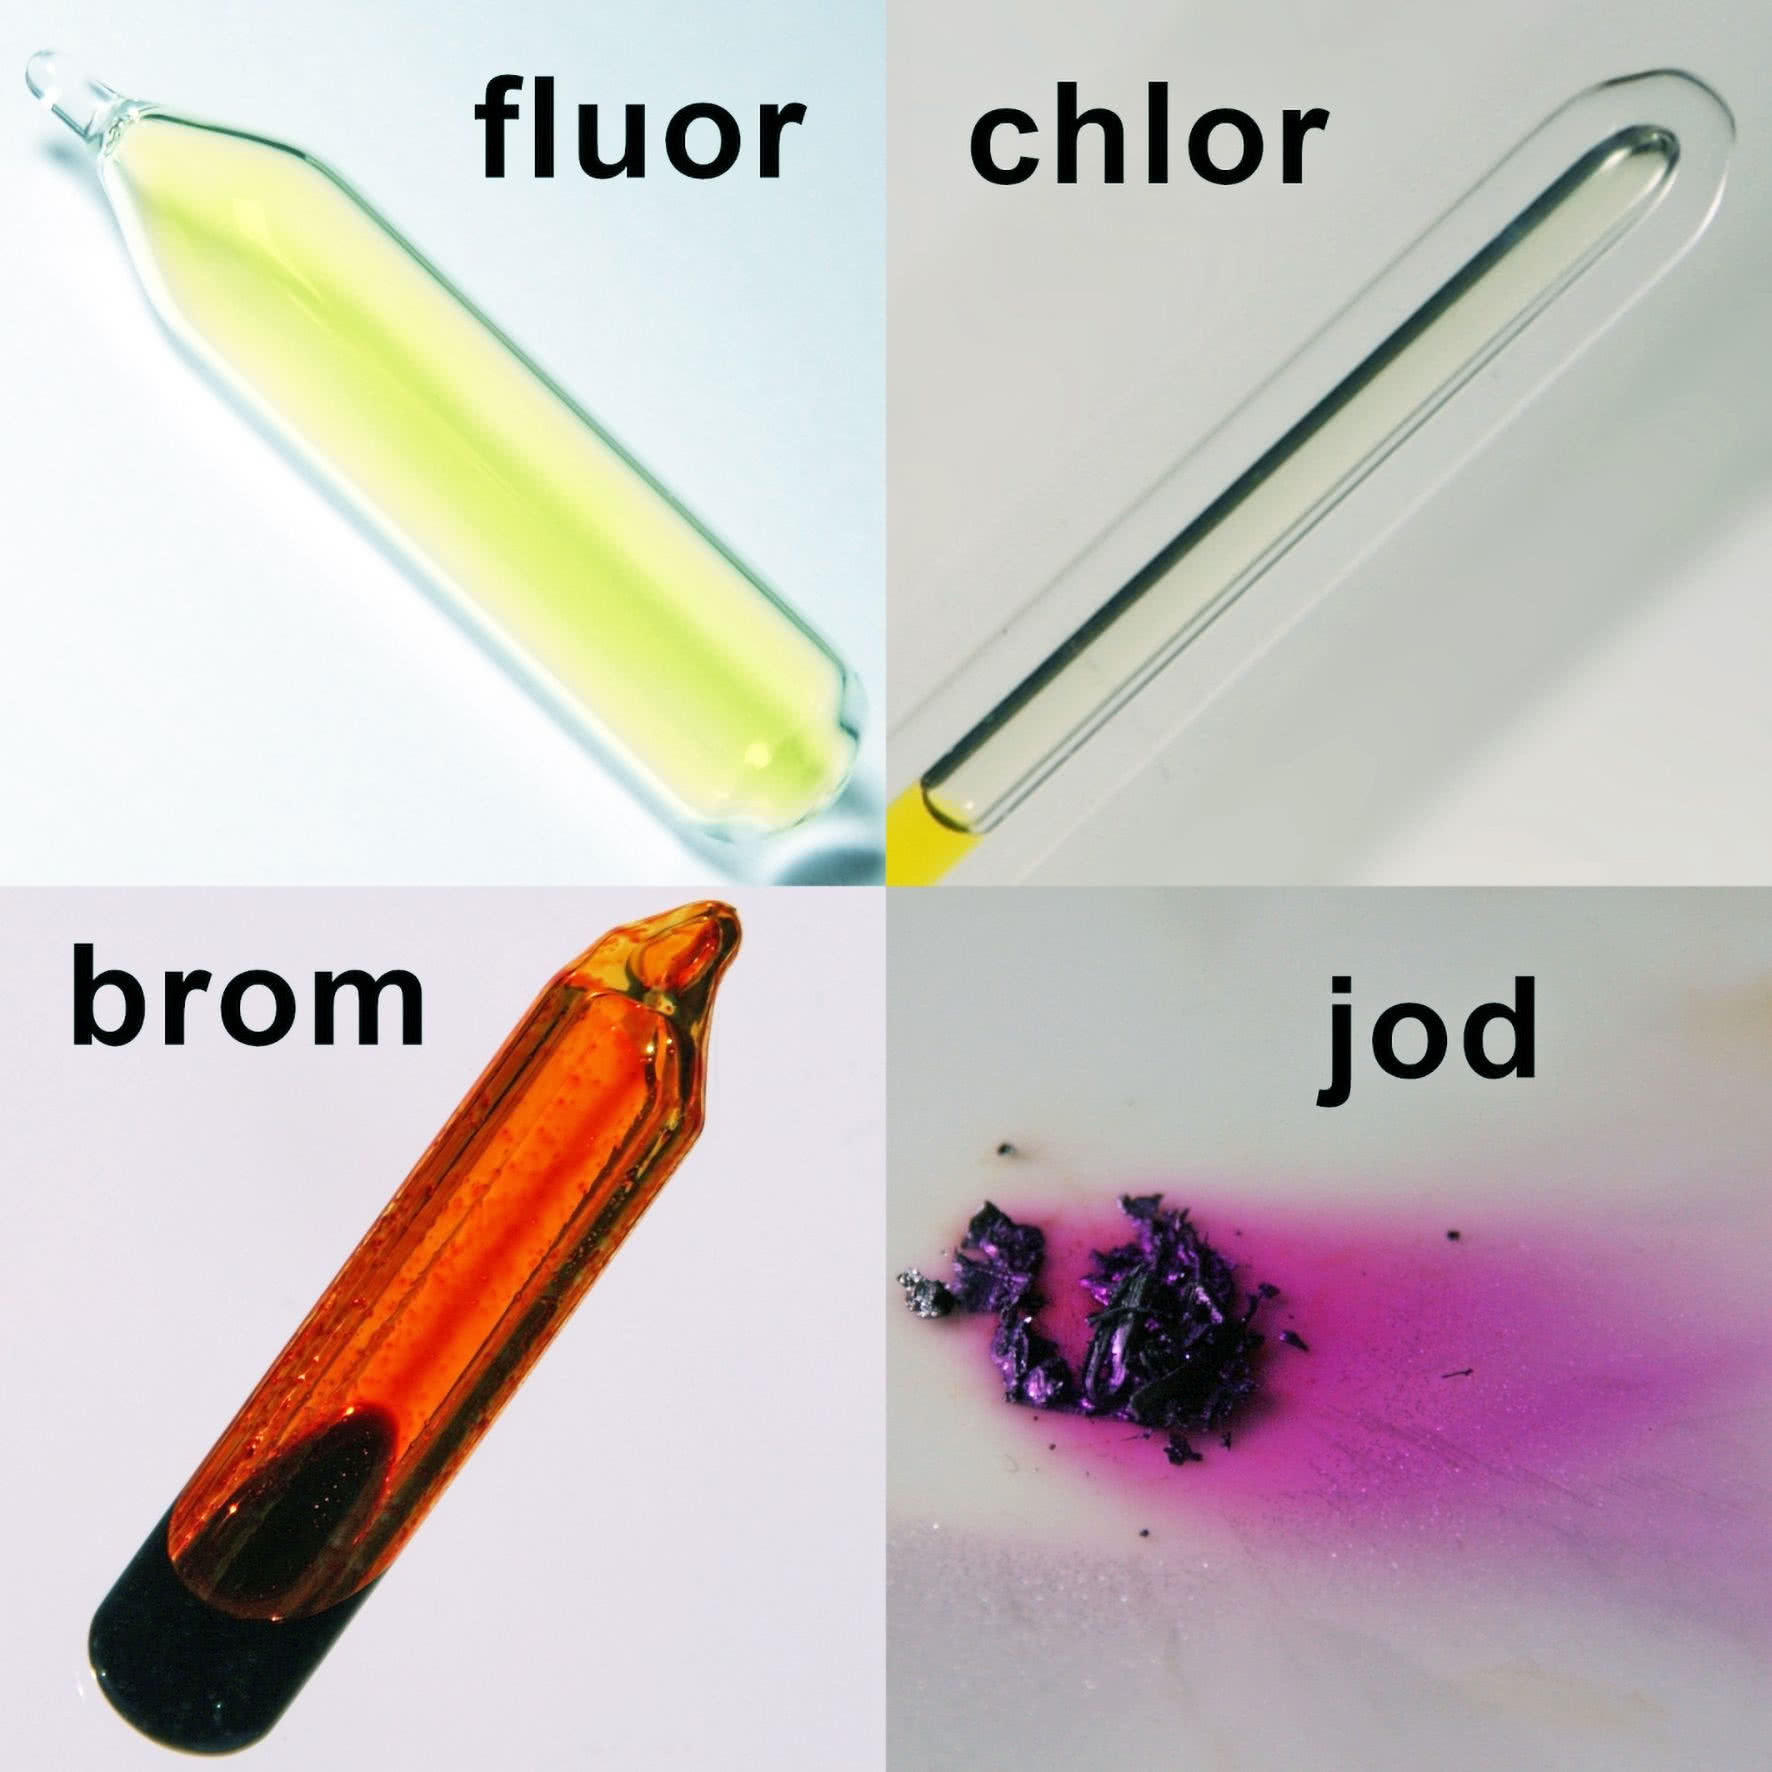 Fluorowce i fluor